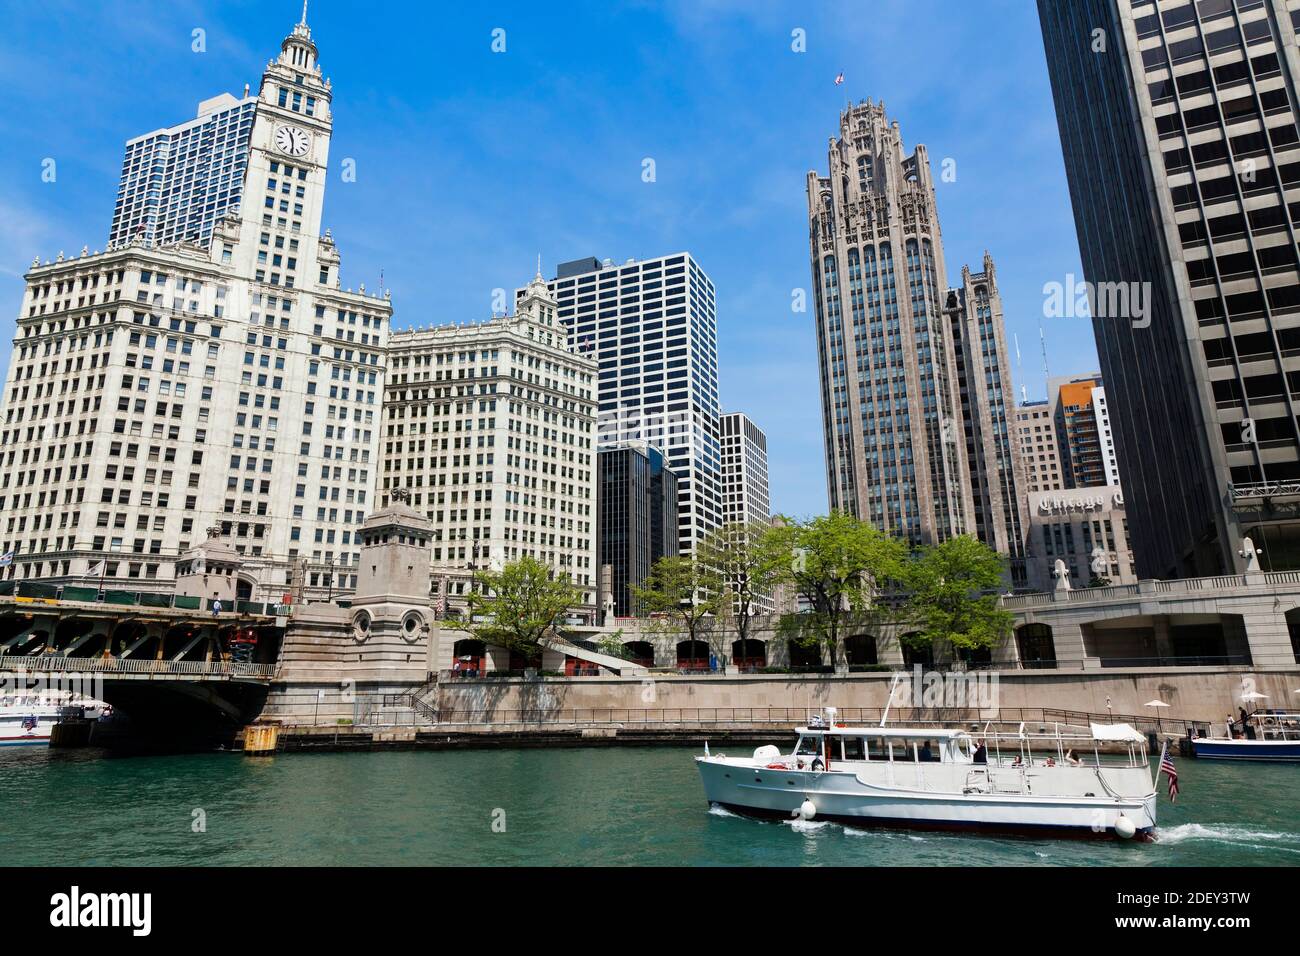 Wrigley Building, Chicago Tribune Building and Chicago River, Chicago, Illinois, USA Stock Photo